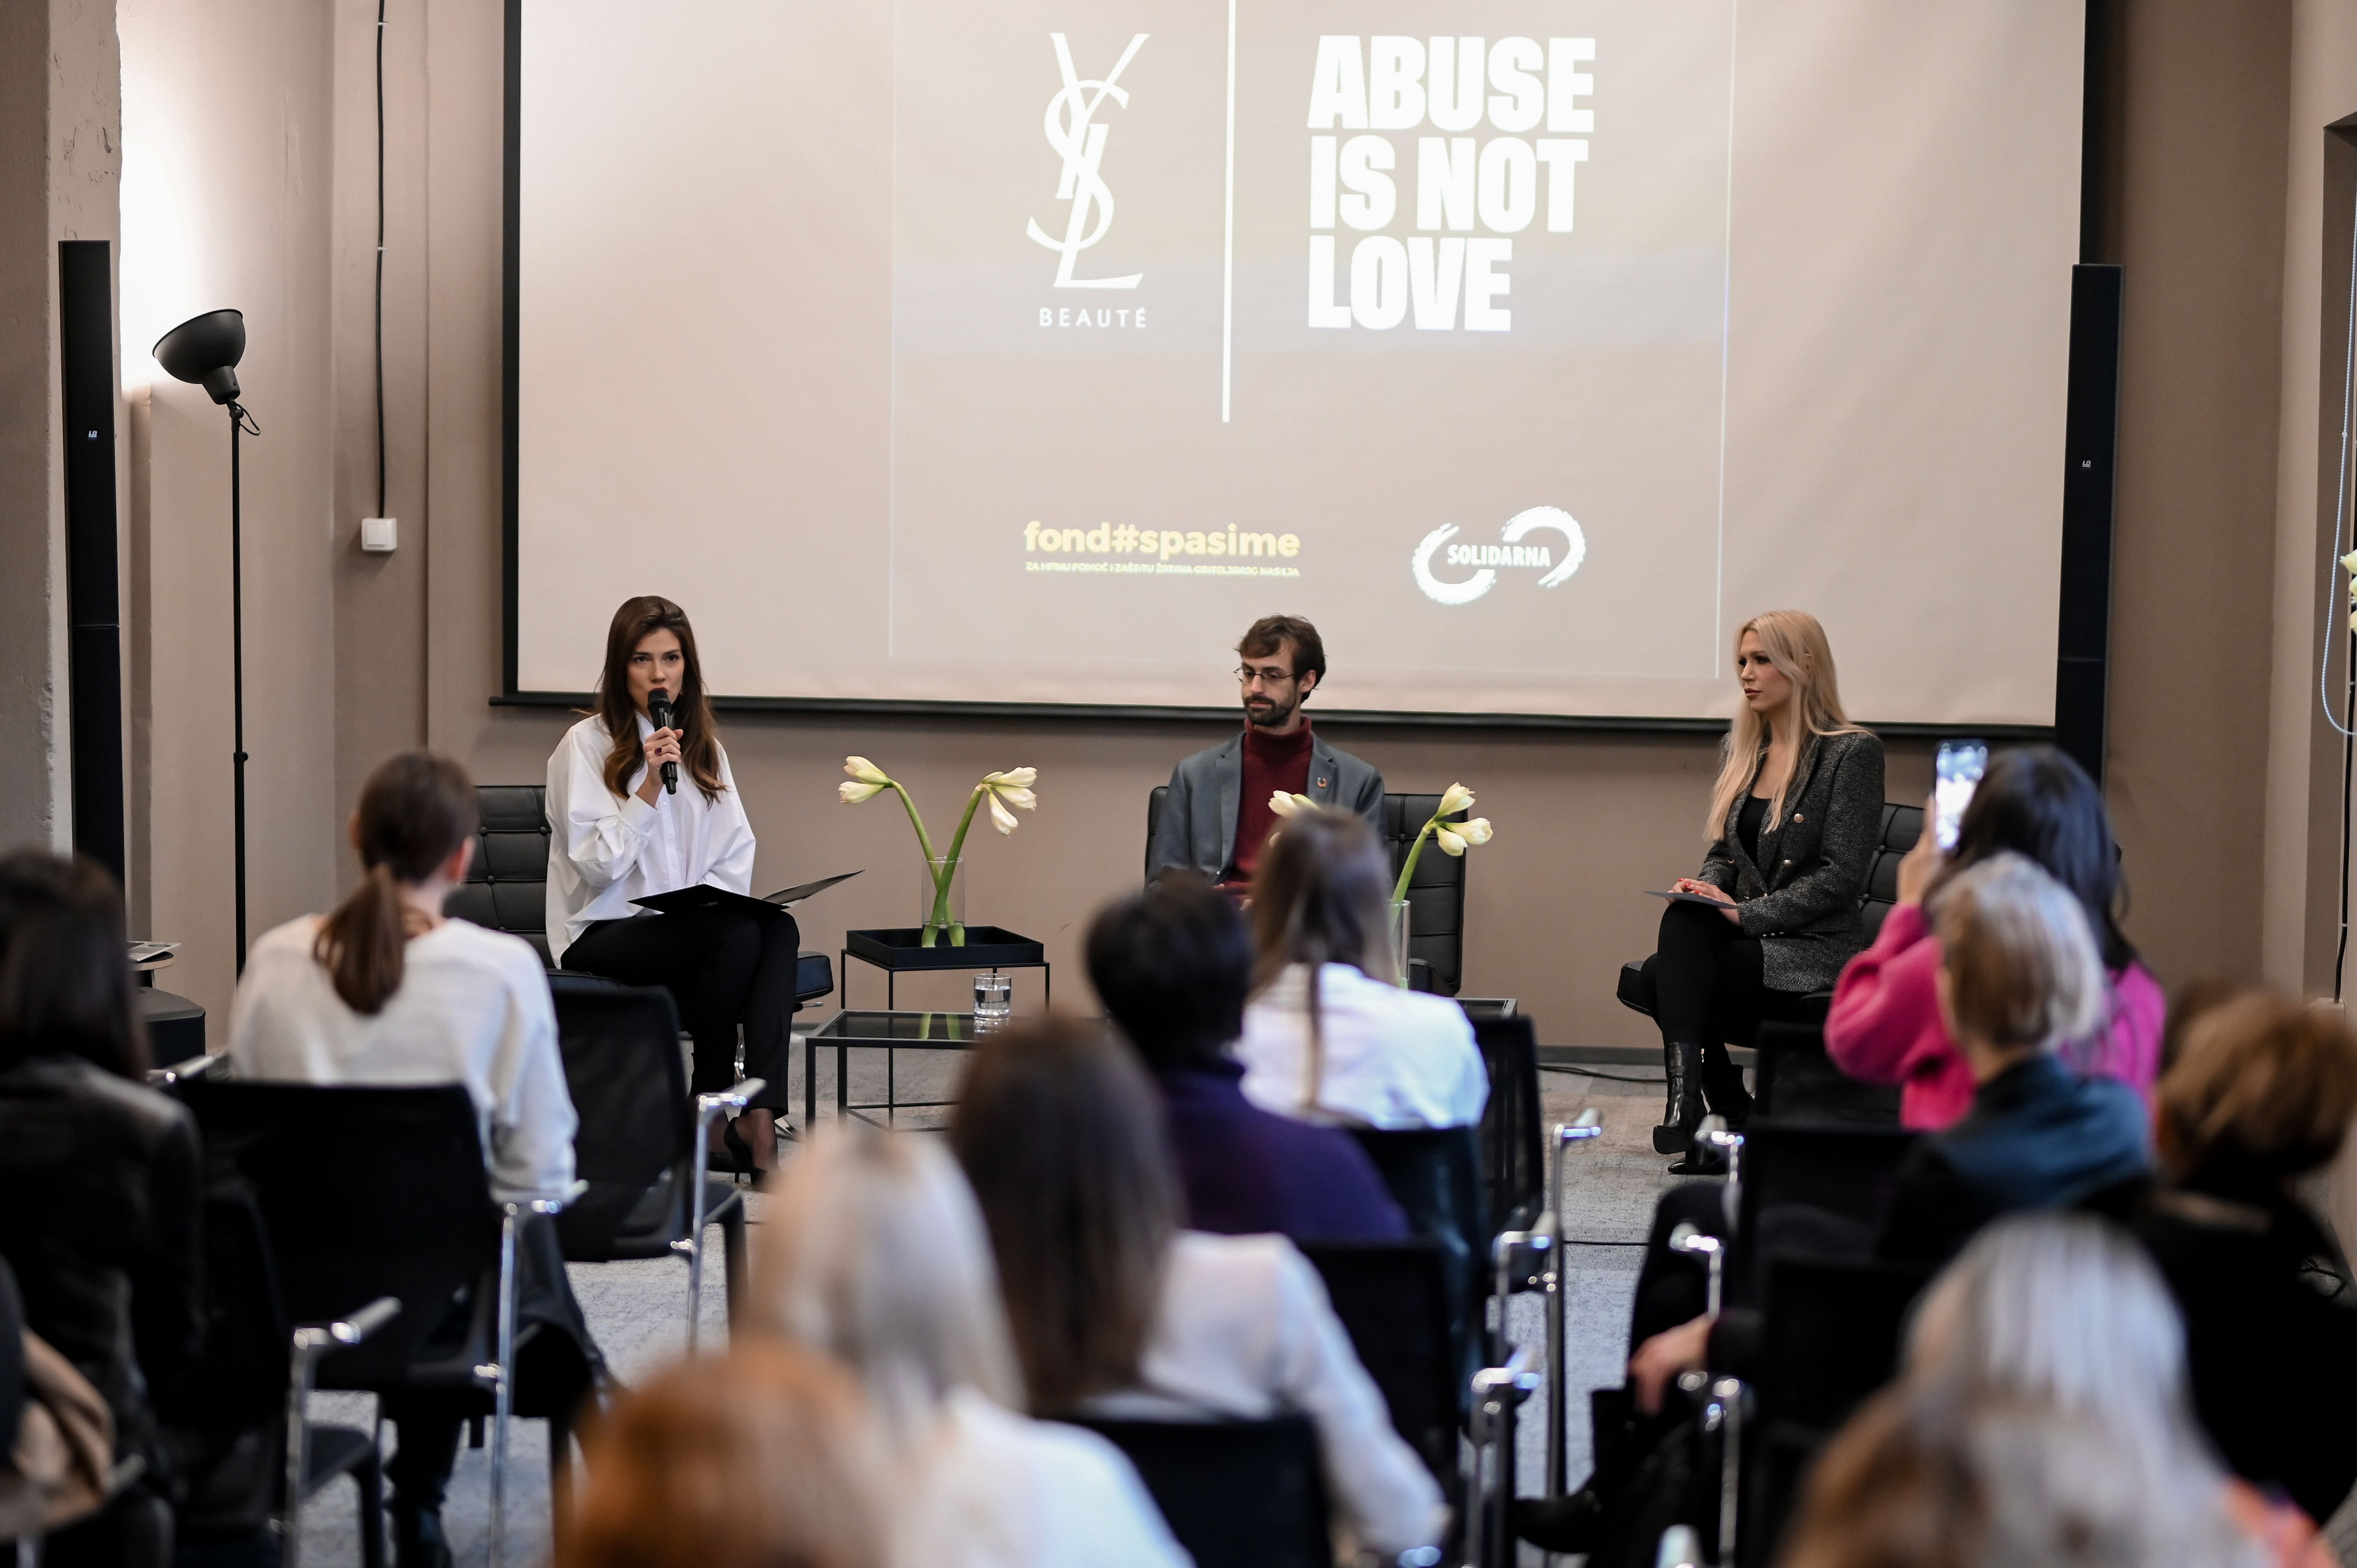 Održana YSL beauty press konferencija pod nazivom „Abuse Is Not Love“